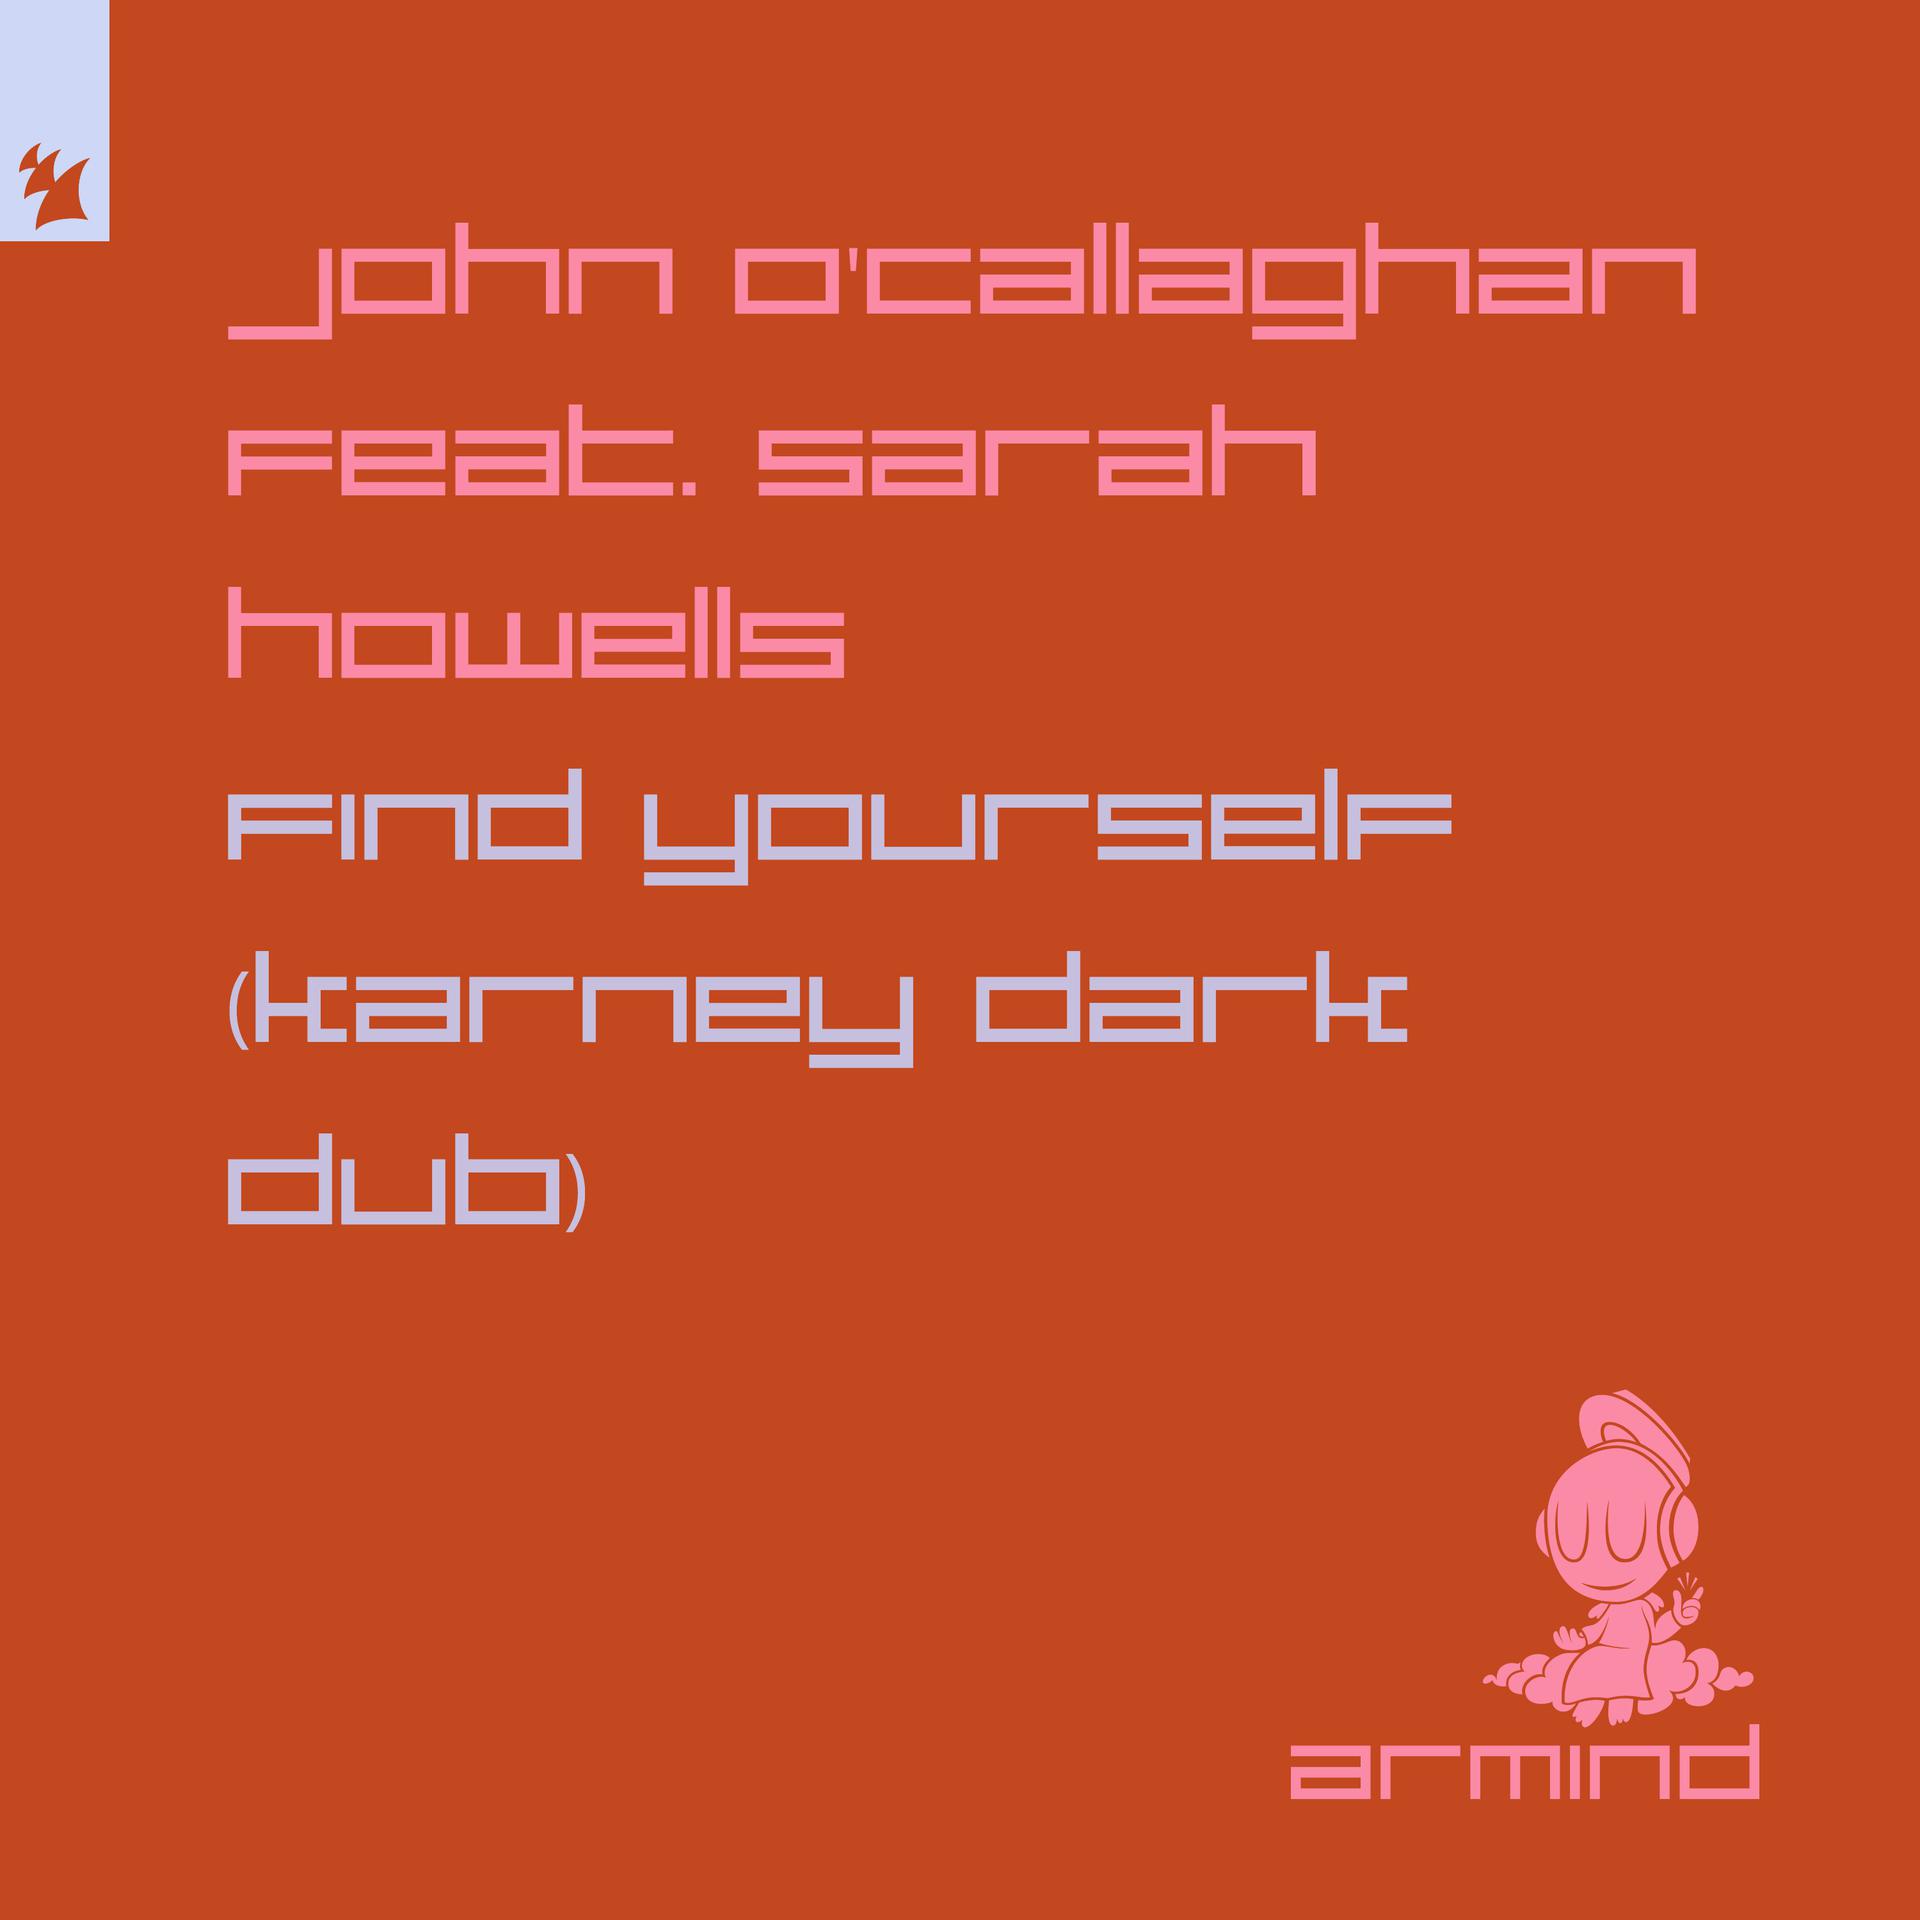 John O'Callaghan feat. Sarah Howells presents Find Yourself (Karney Dark Dub) on Armind